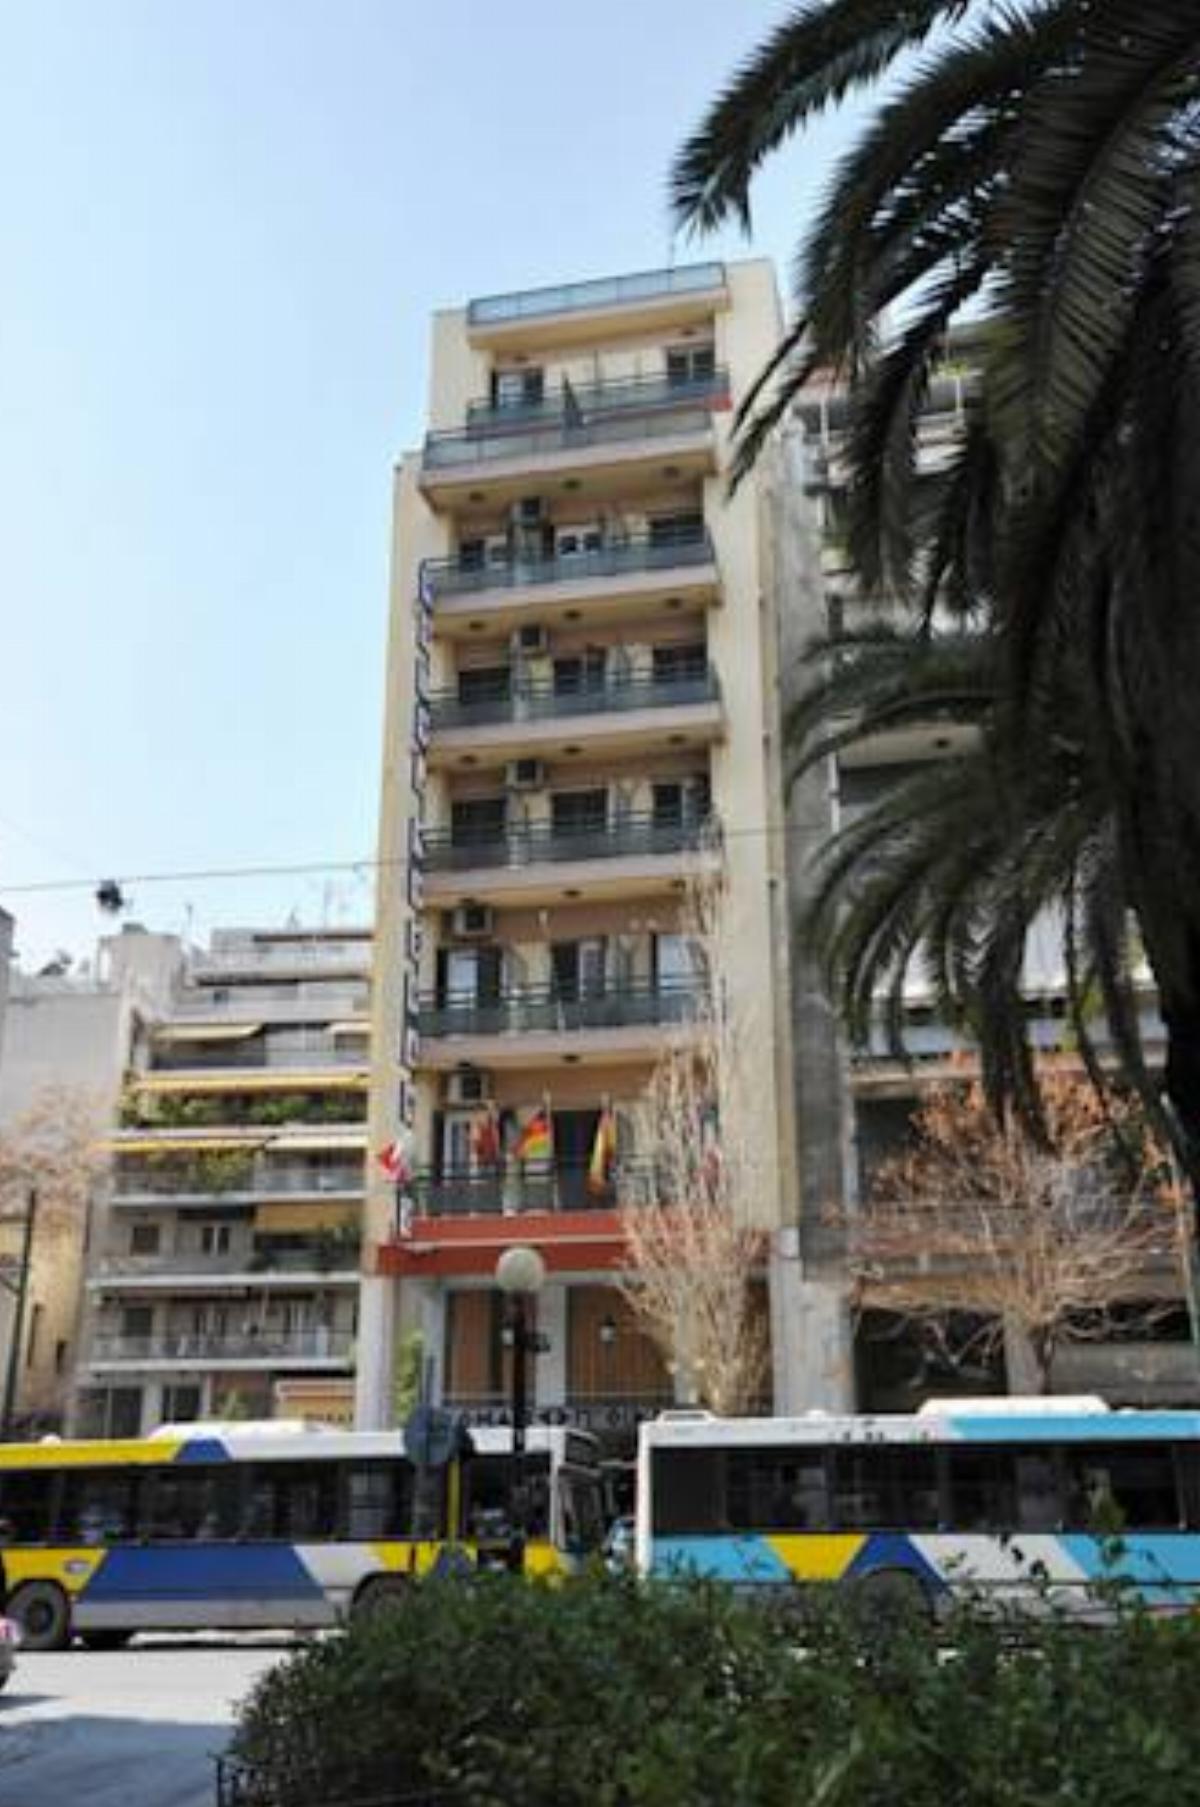 Pergamos Hotel Hotel Athens Greece